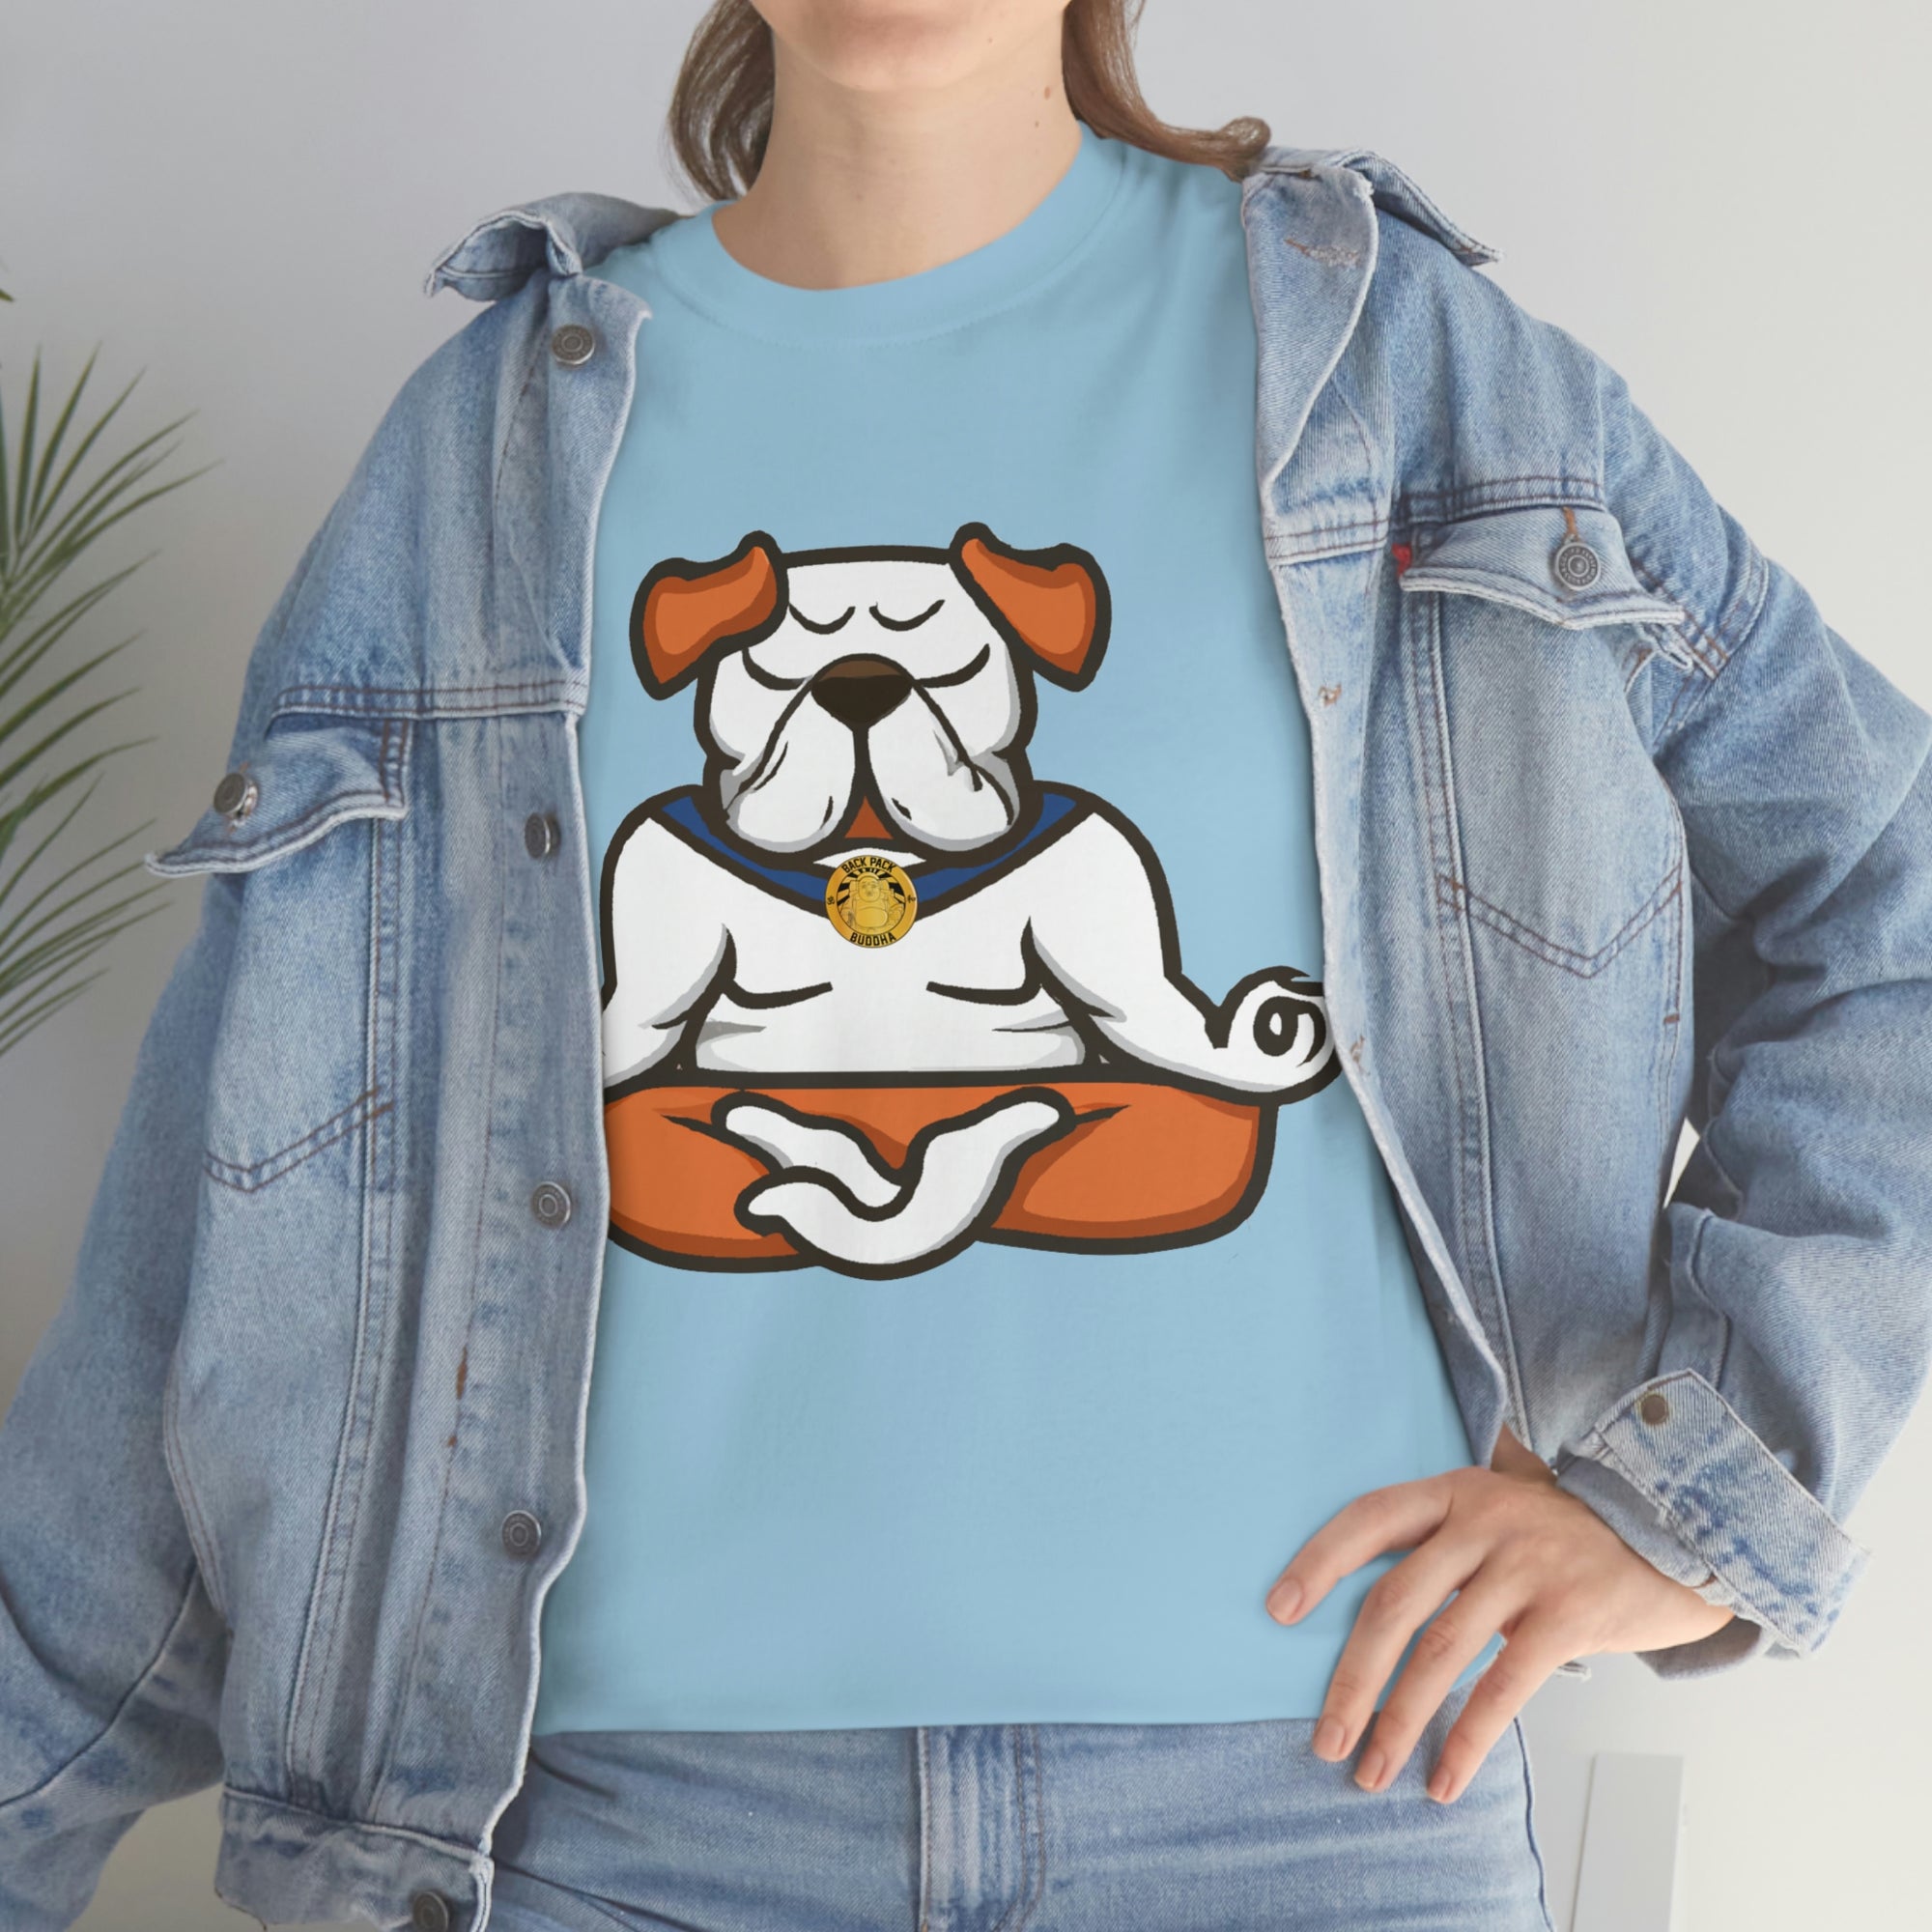 Zen Dog #2 - Unisex T-shirt